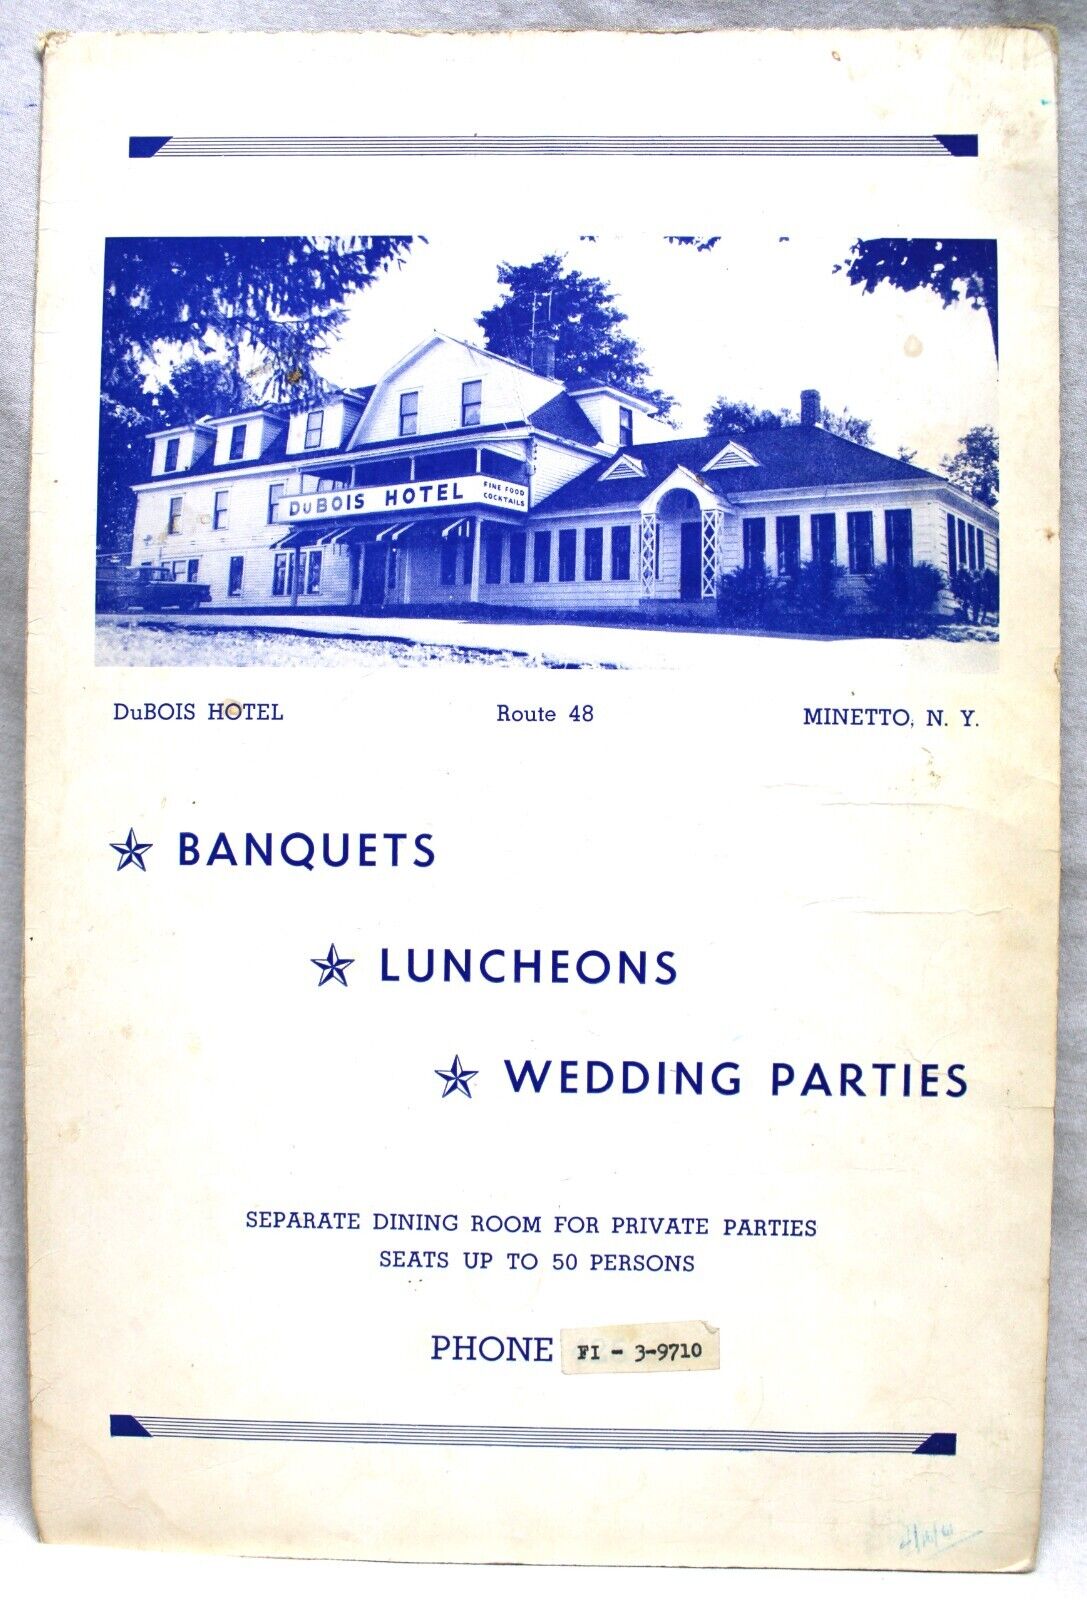 DUBOIS HOTEL RESTAURANT OF MINETTO NEW YORK DINING MENU 1961 VINTAGE